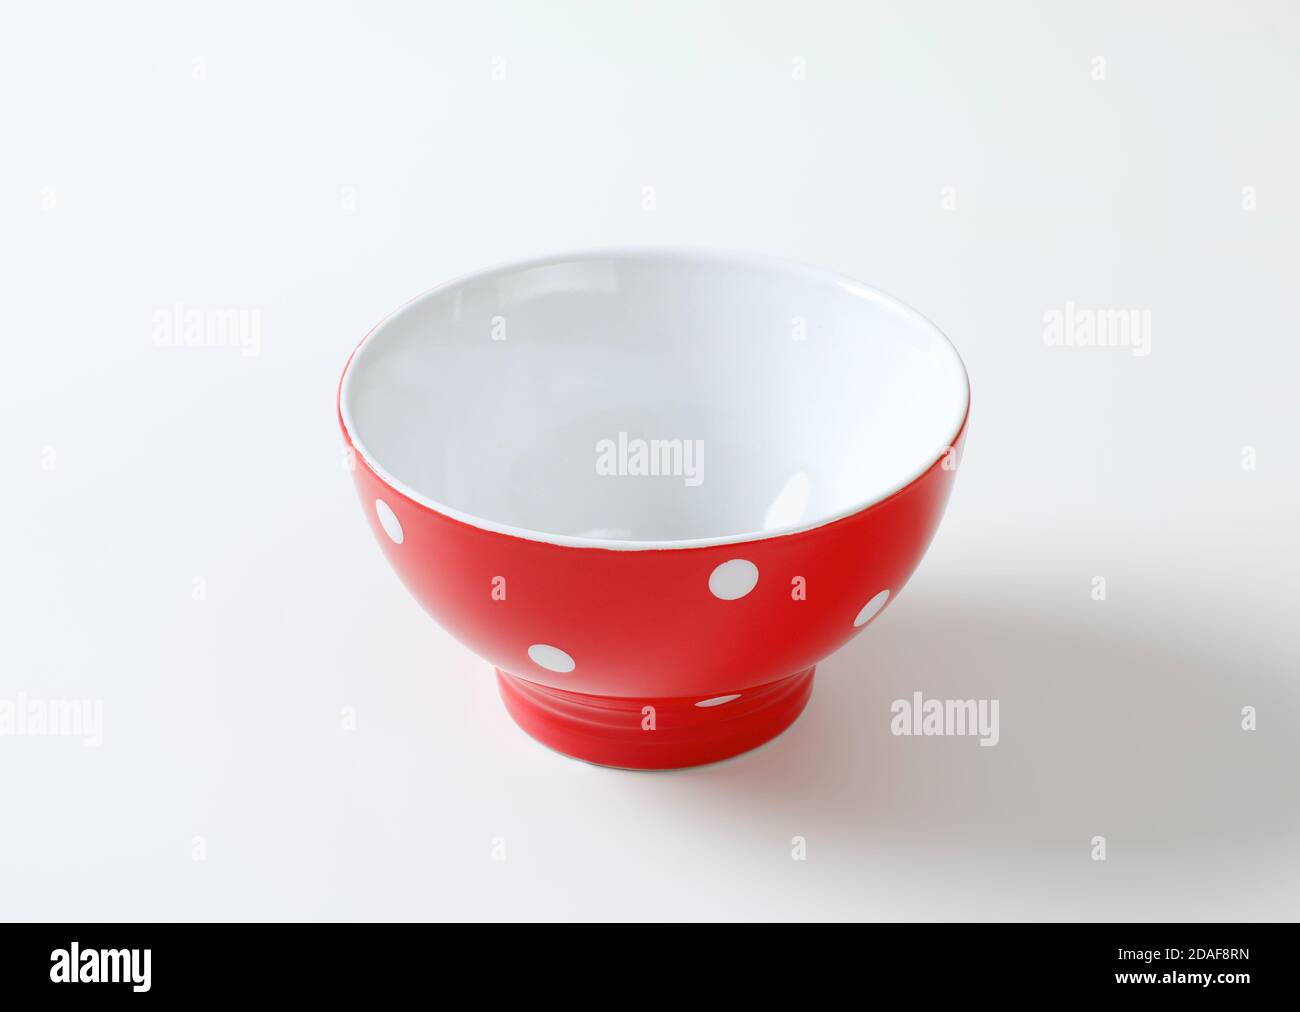 Ceramic red and white polka dot breakfast or rice bowl Stock Photo